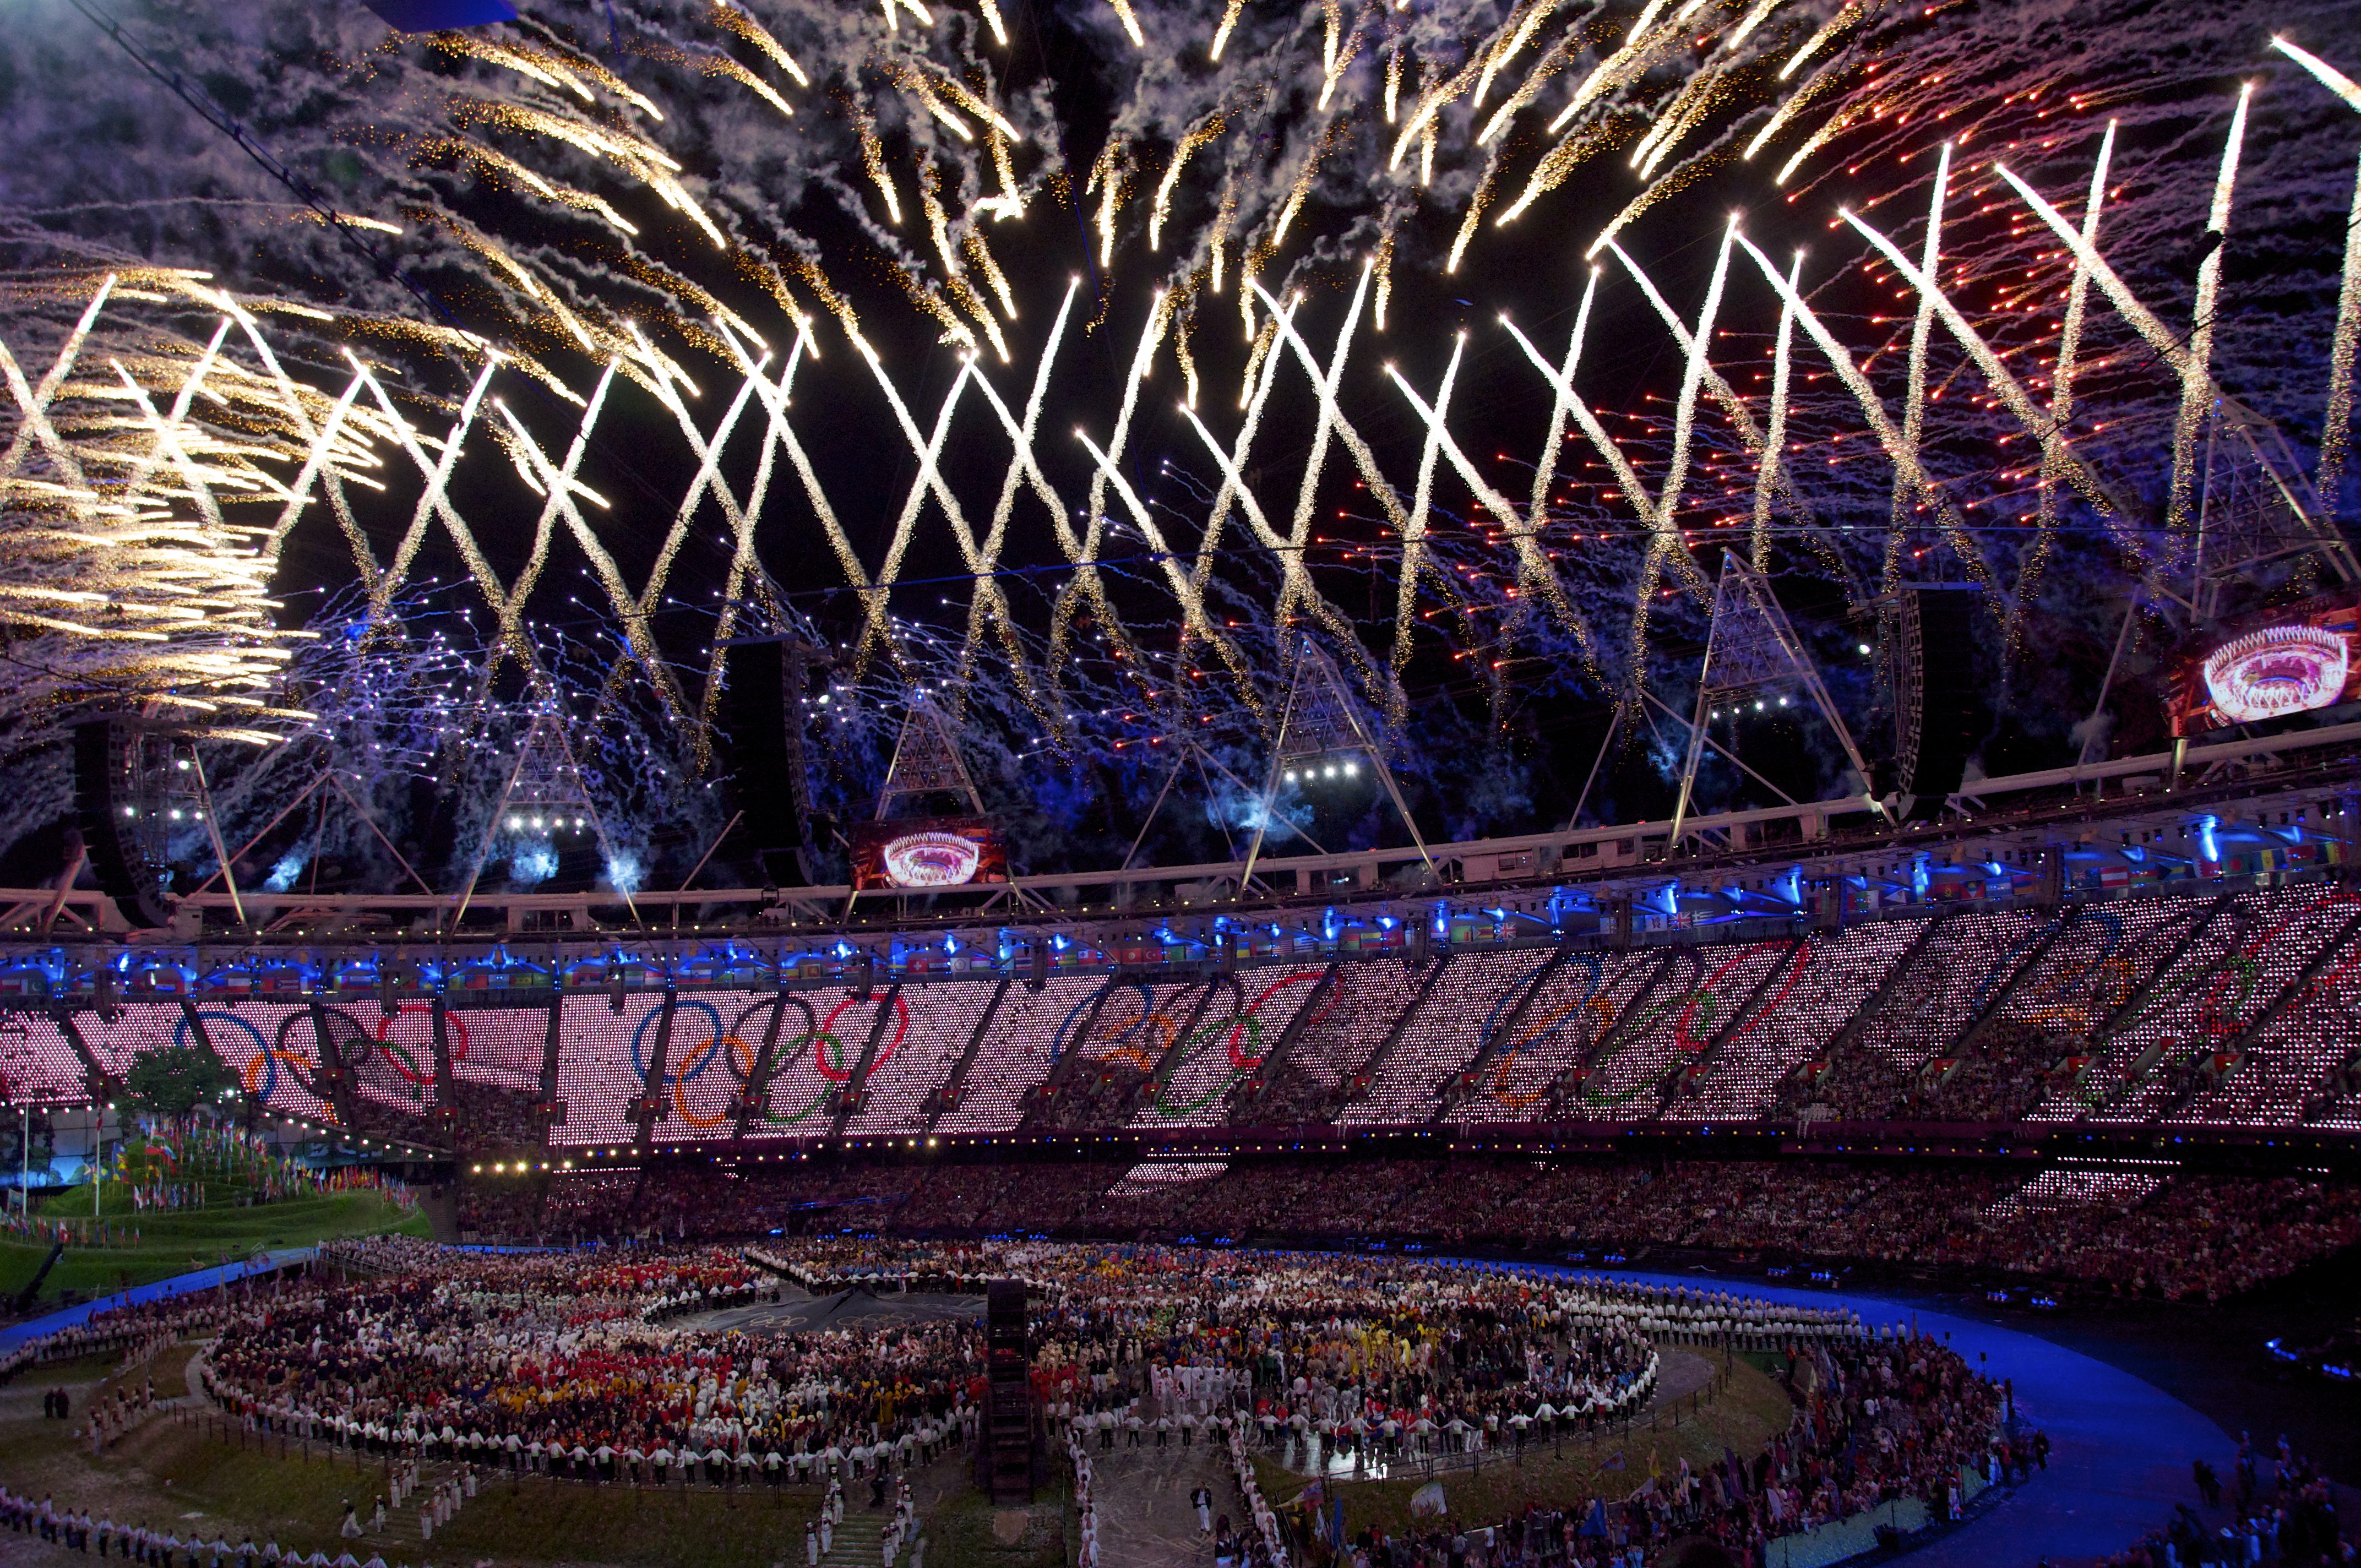 2012 Olympic Stadium